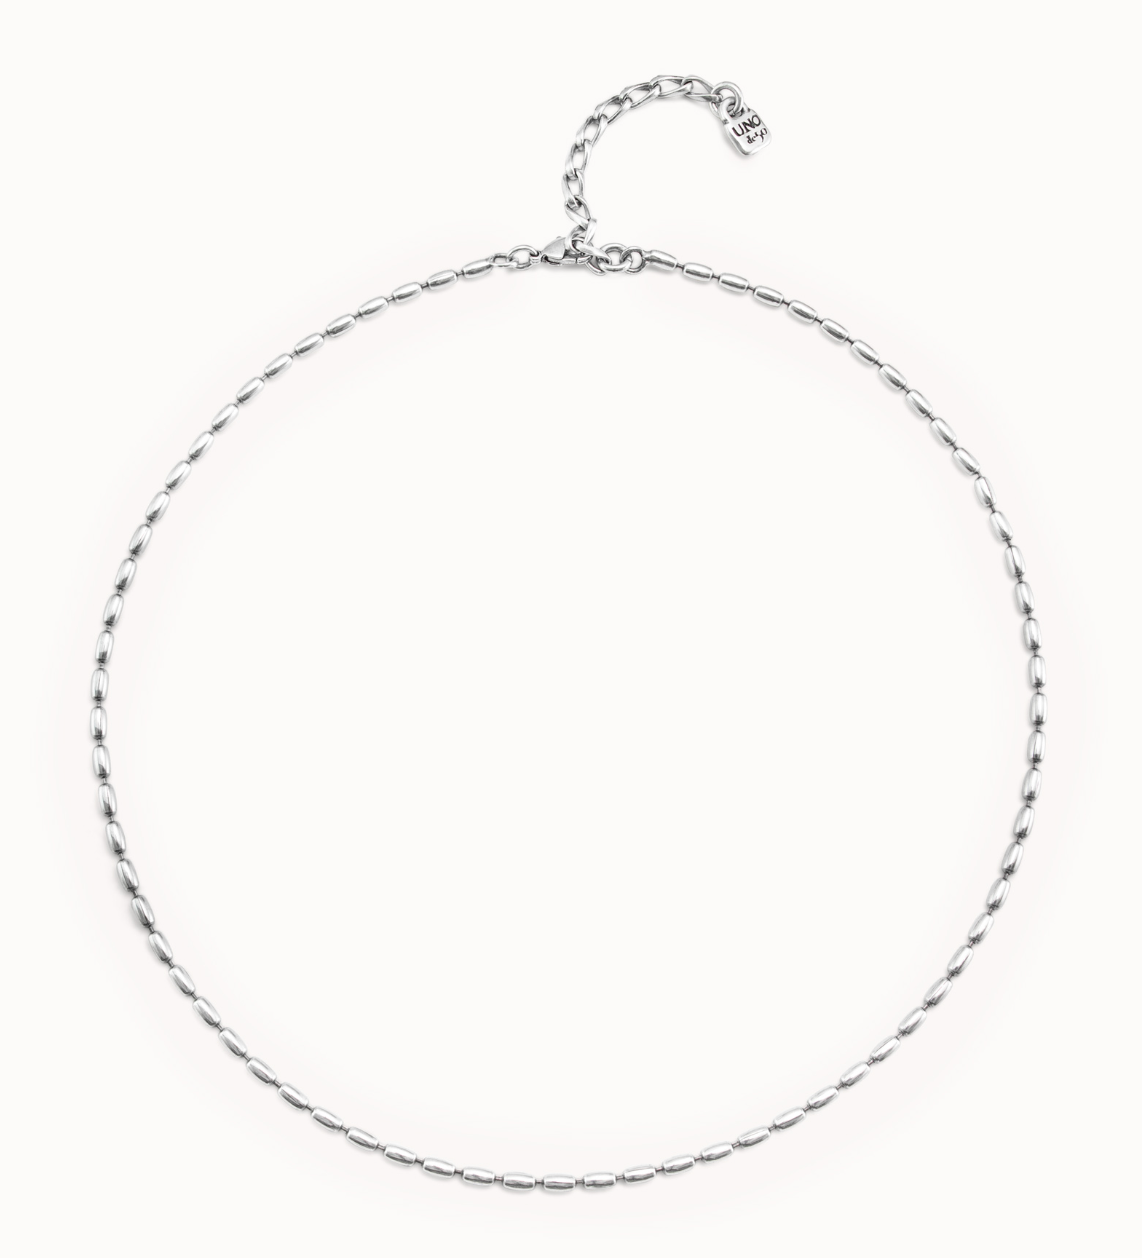 Silver My Chain Necklace - Uno de 50